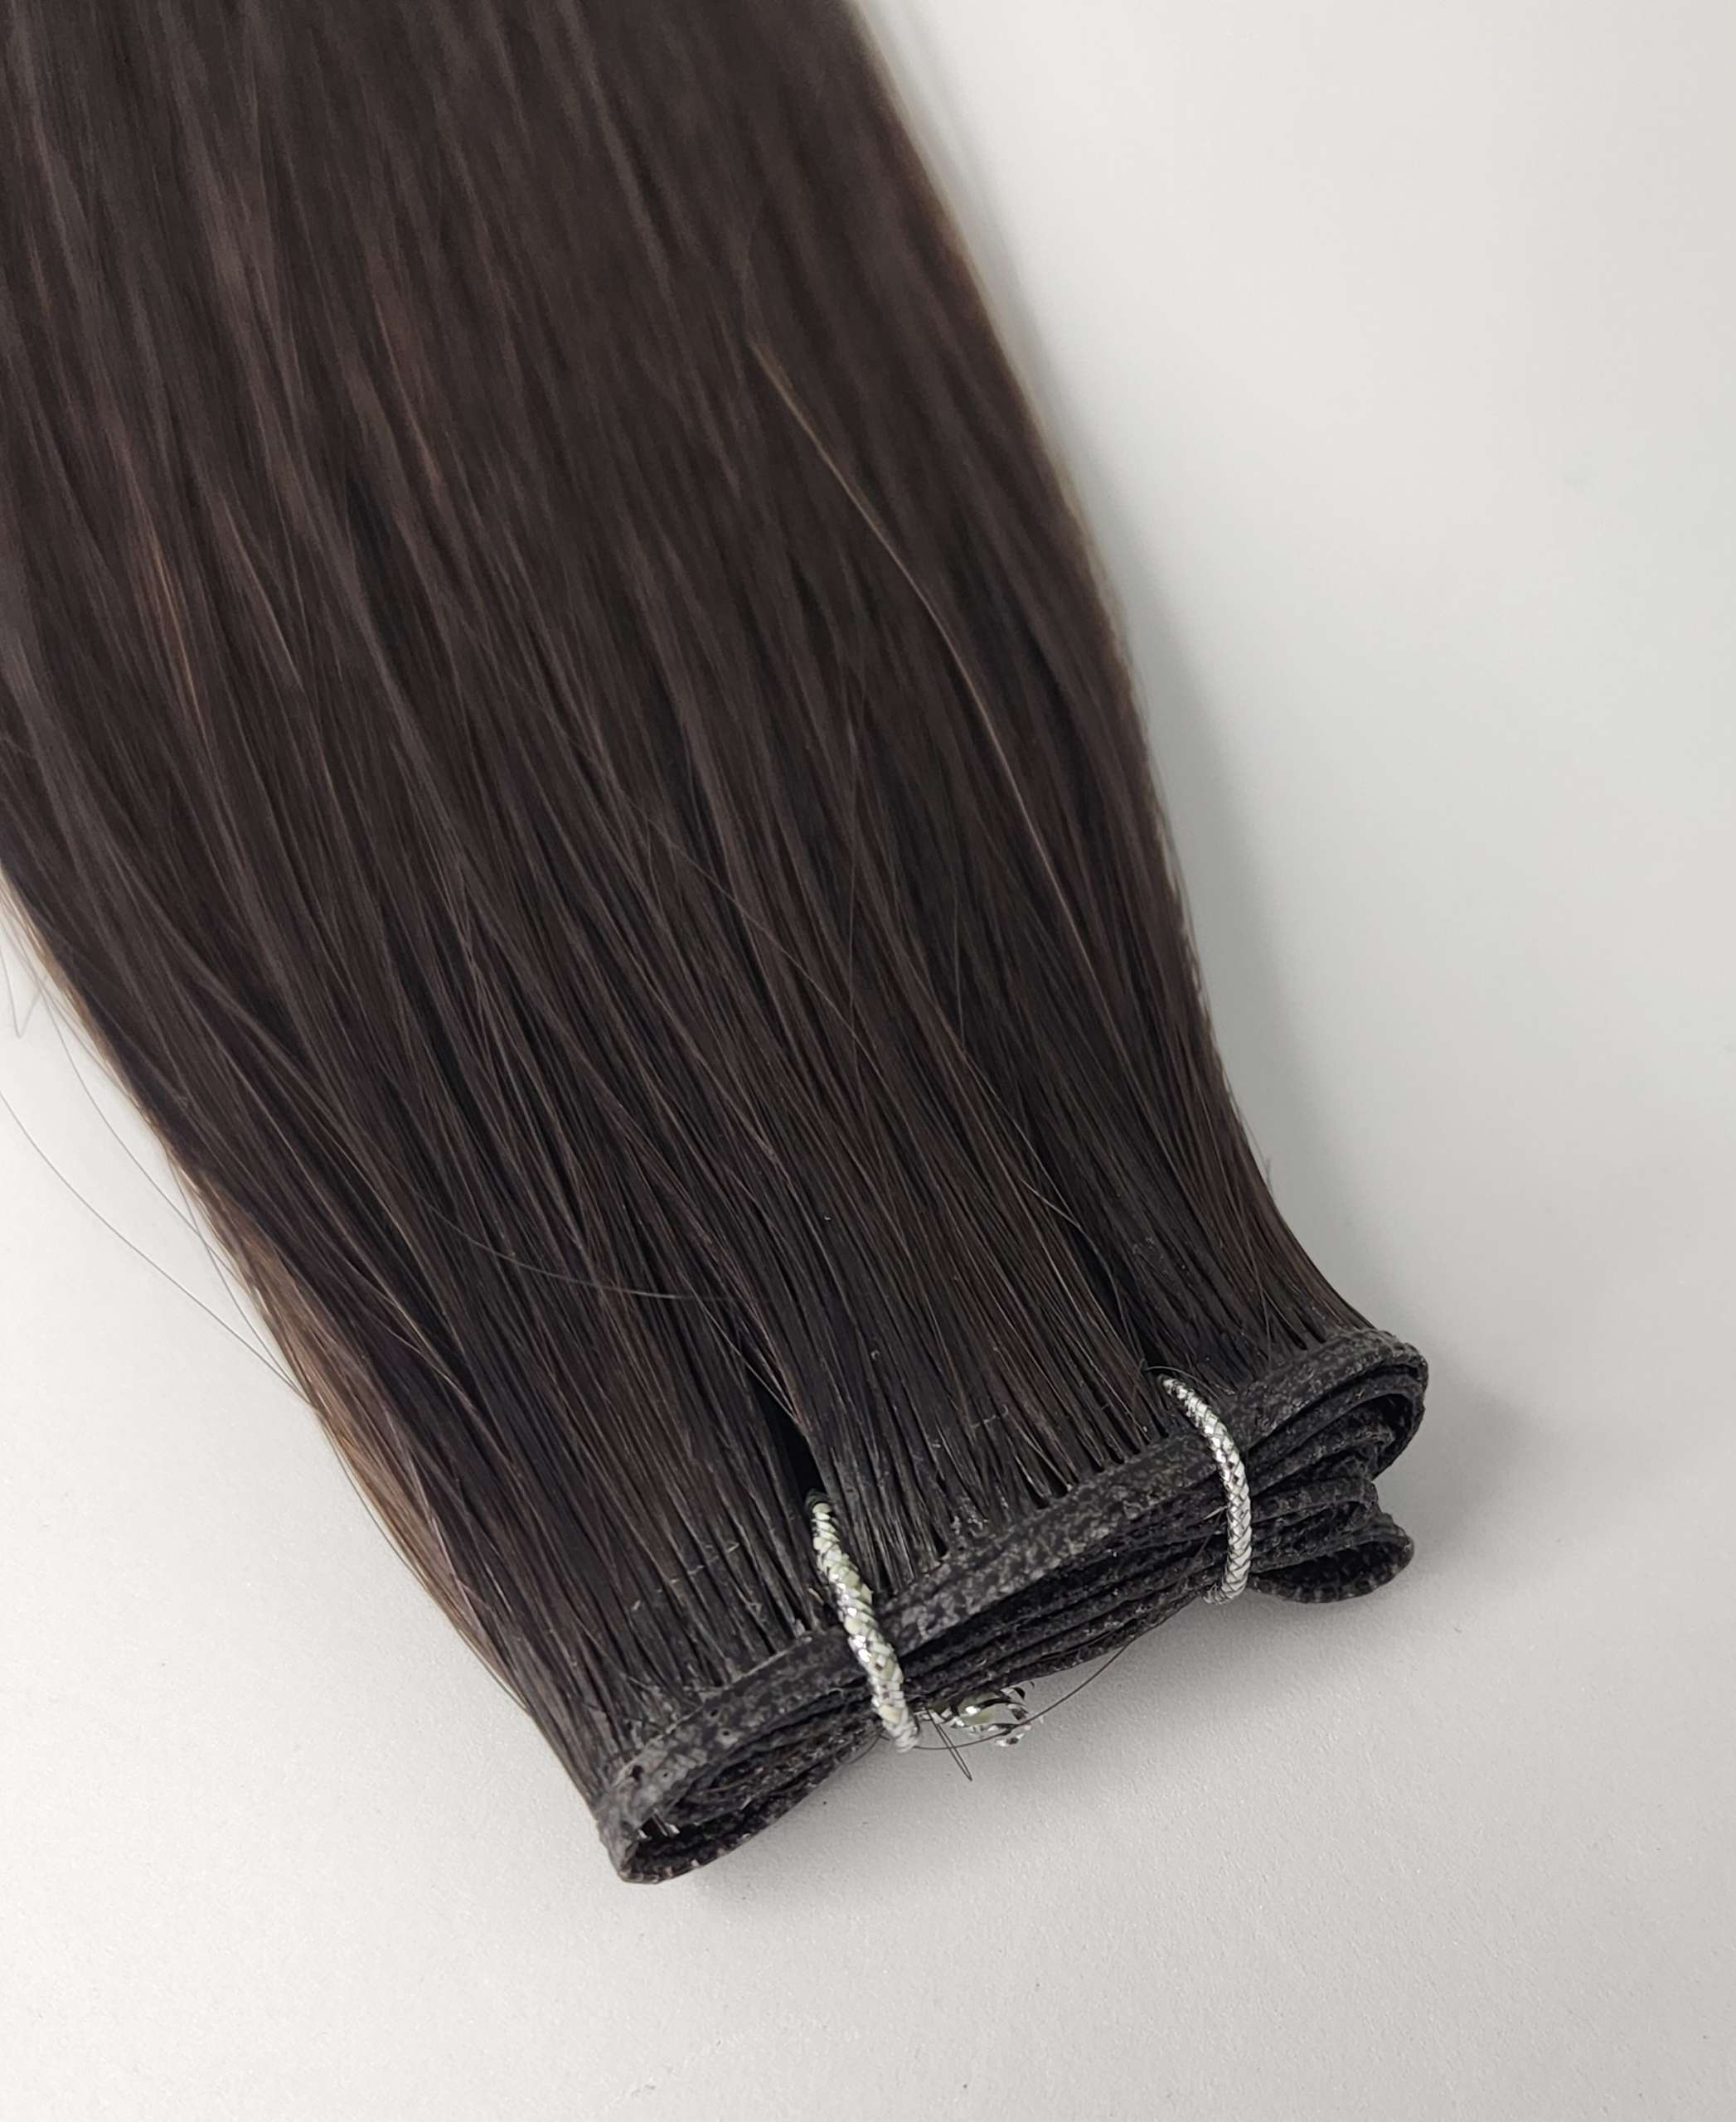 2 Golden Brown Ingenious Flexi Russian Weft Hair Extensions 20-21